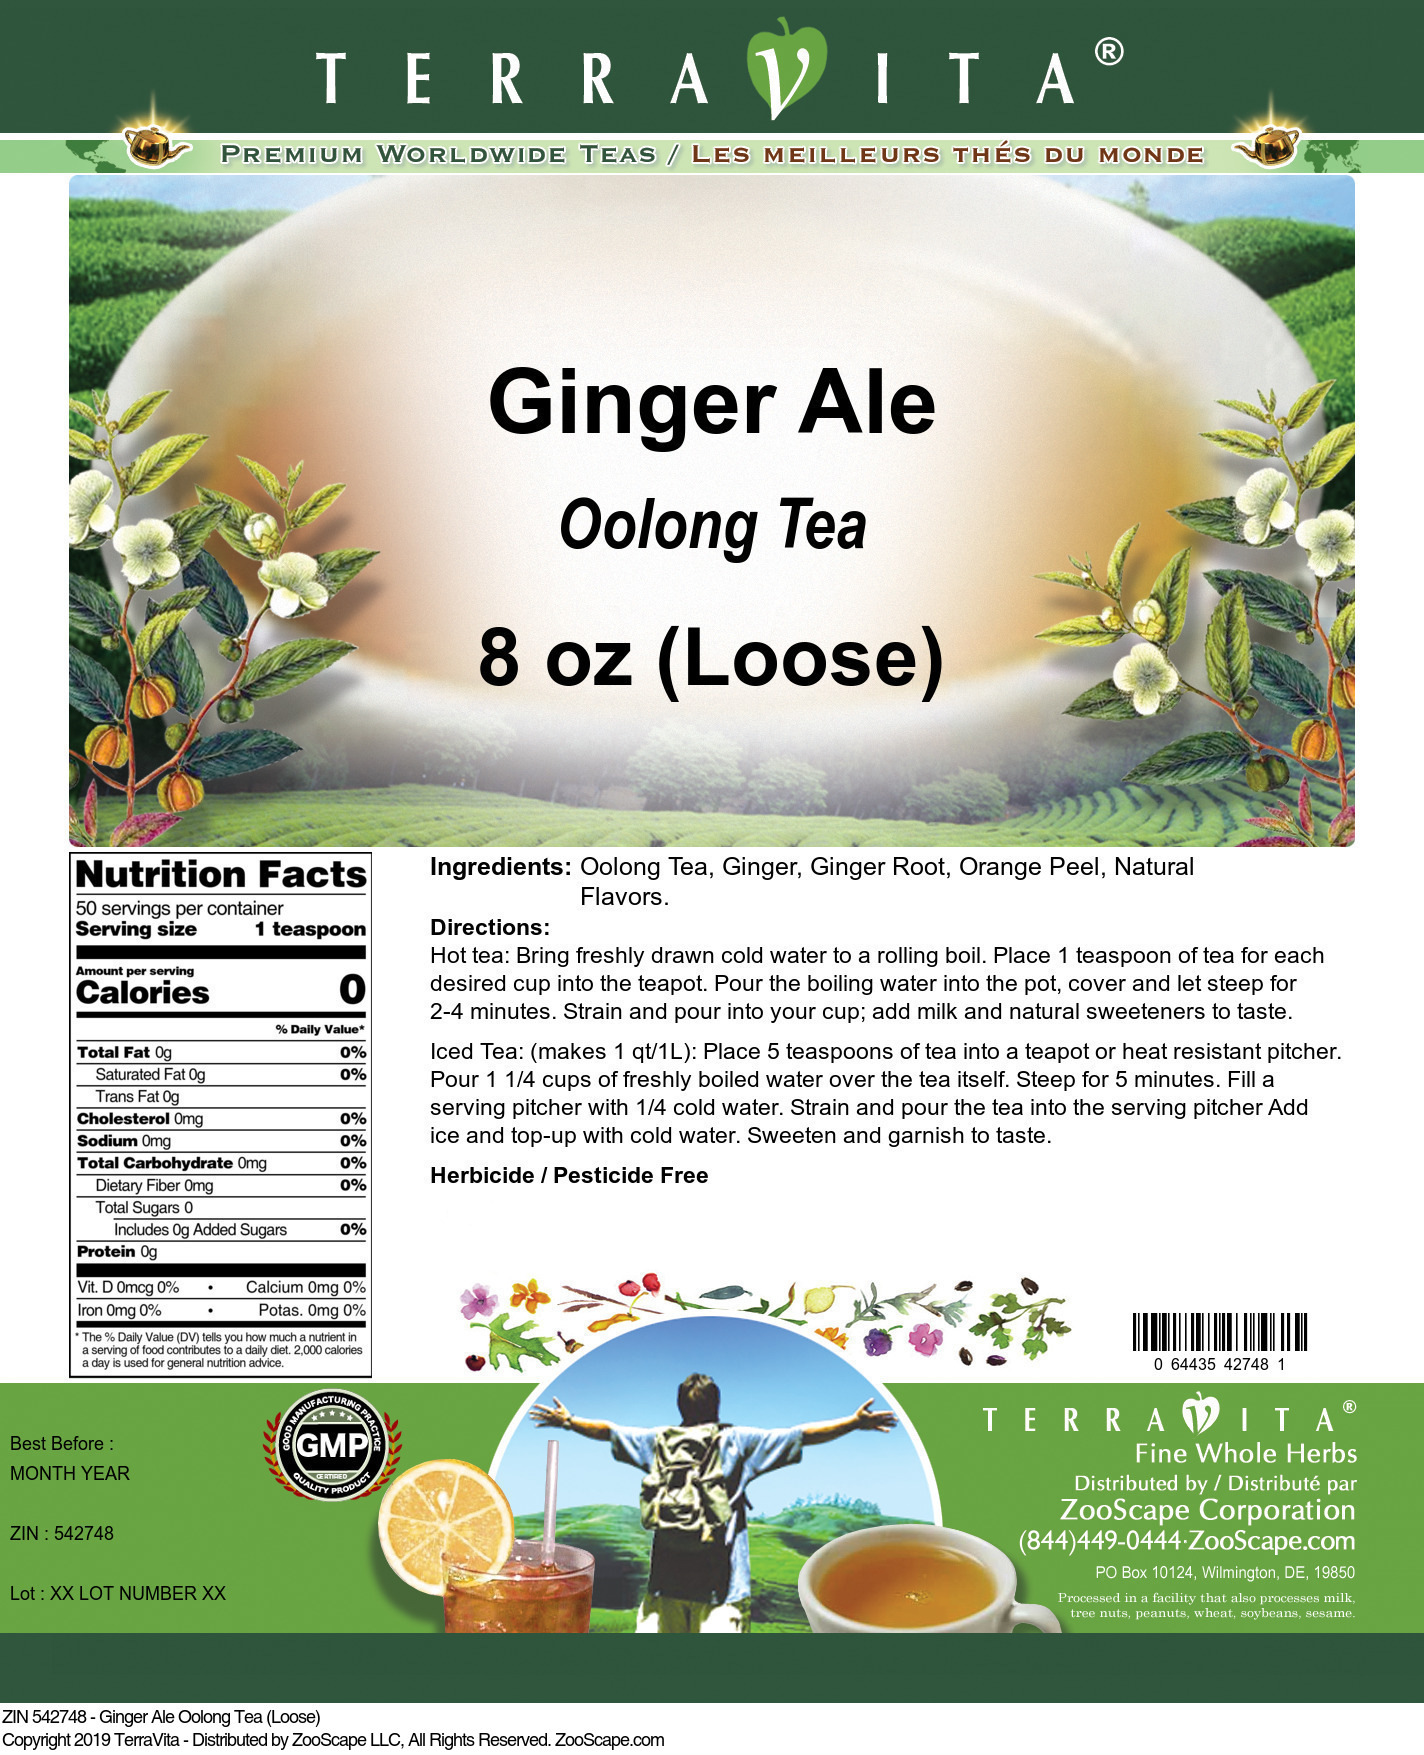 Ginger Ale Oolong Tea (Loose) - Label